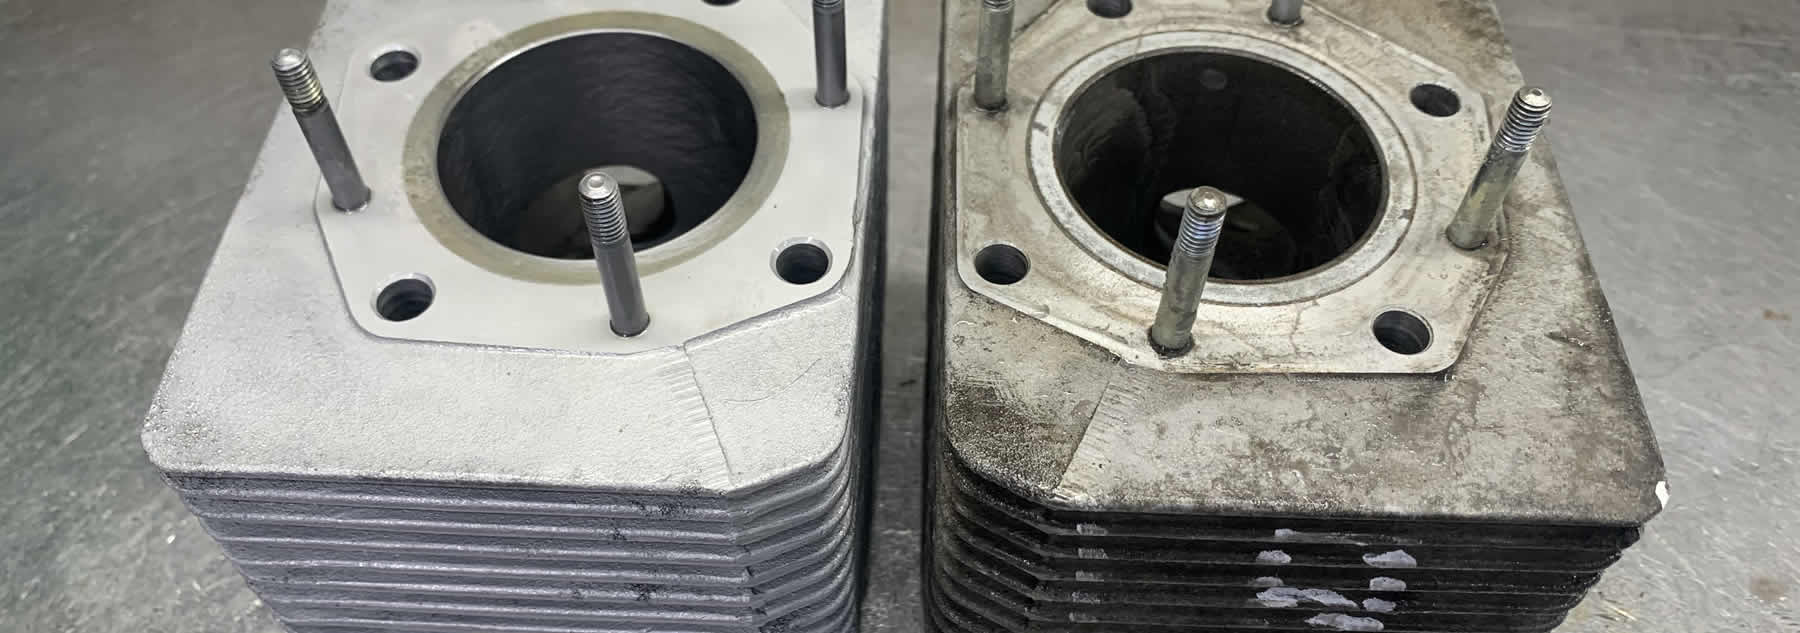 Northern Crankshafts offers vapor blasting services to help make your parts look their best.